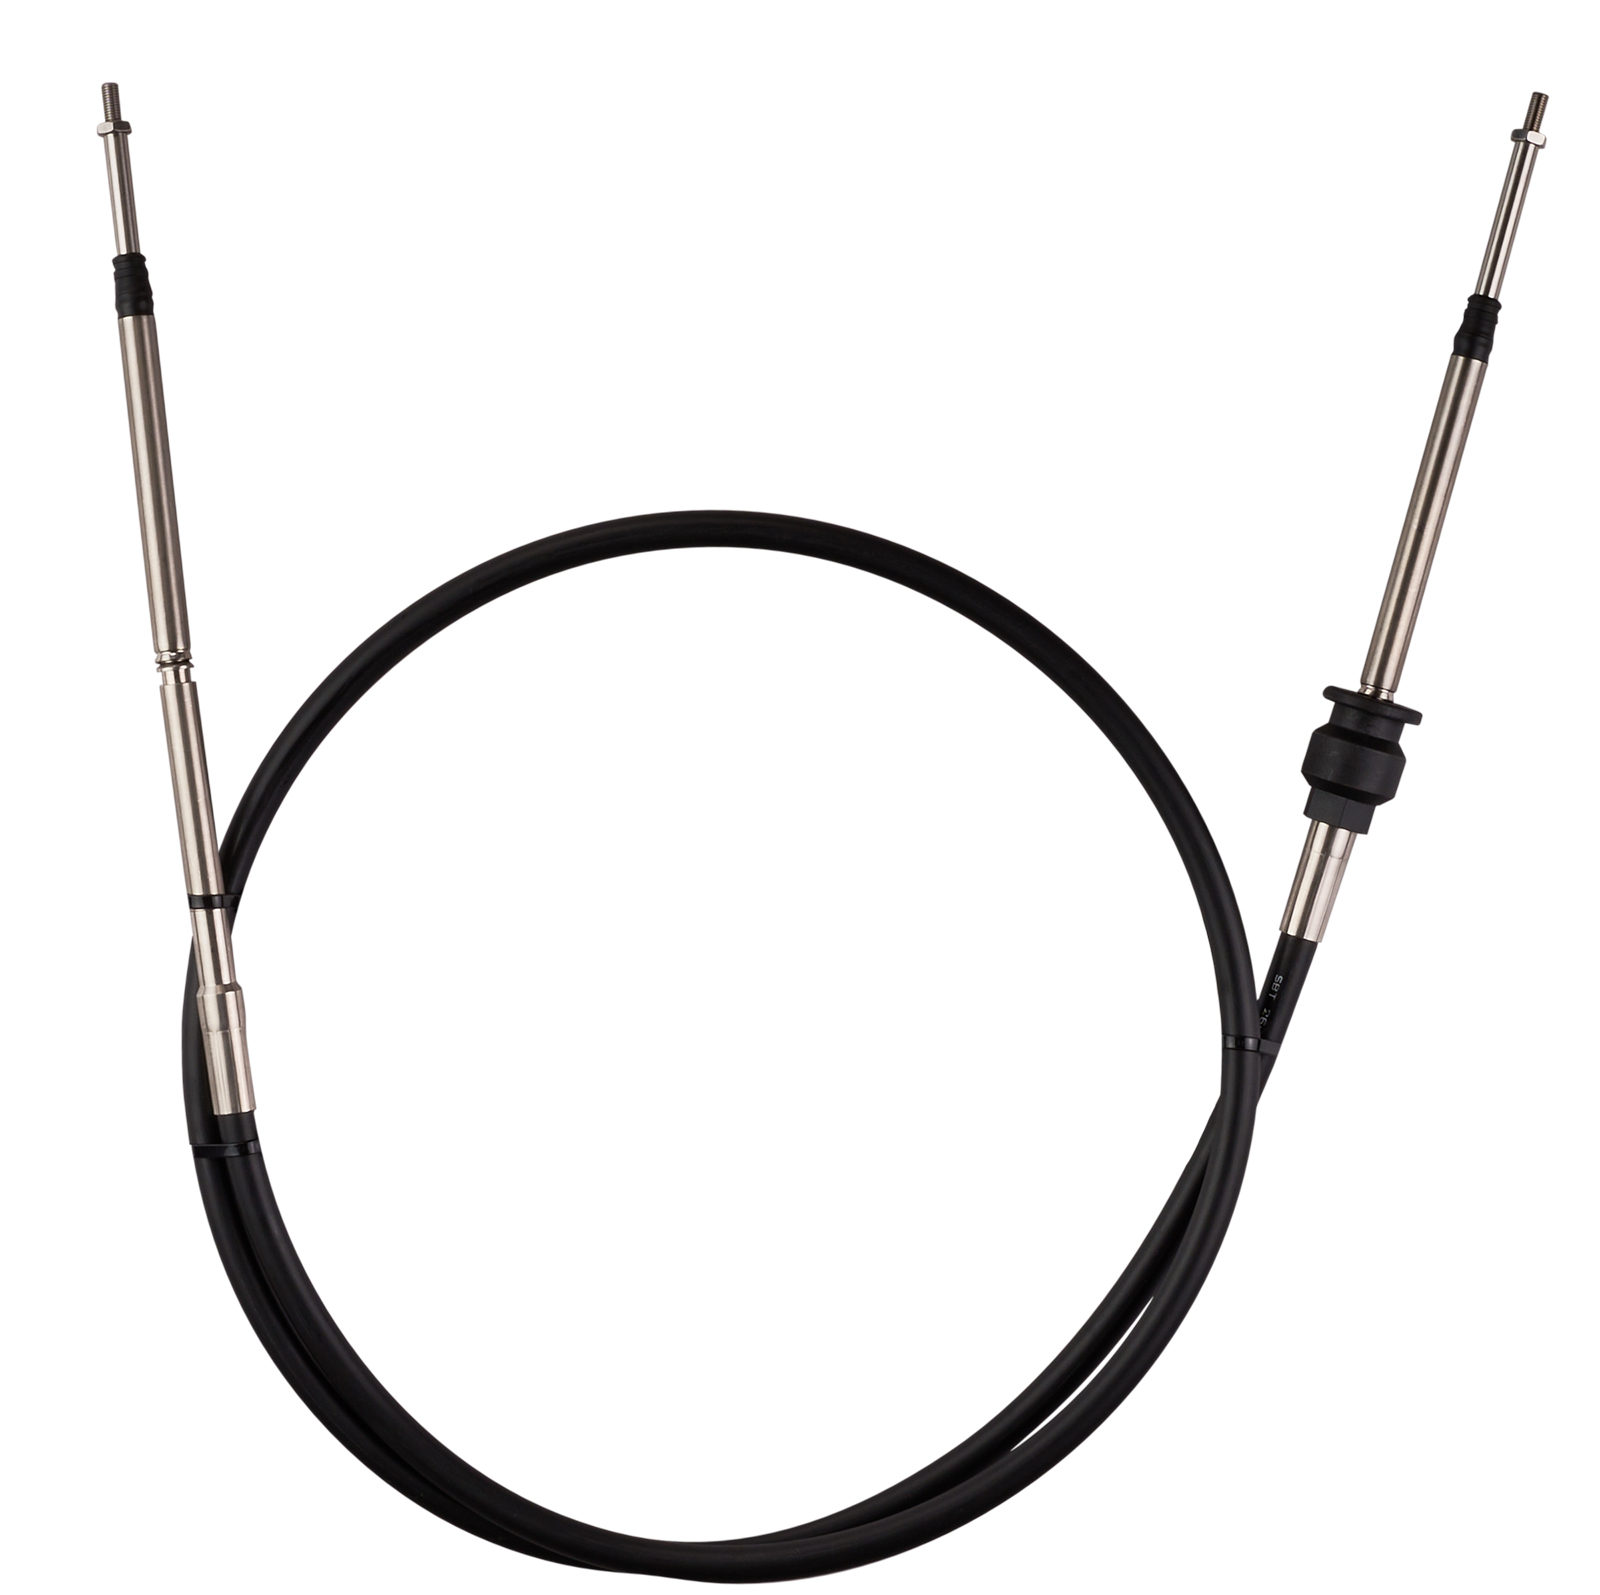 Steering Cable for Sea-Doo GTX RFI / GTX DI: ShopSBT.com